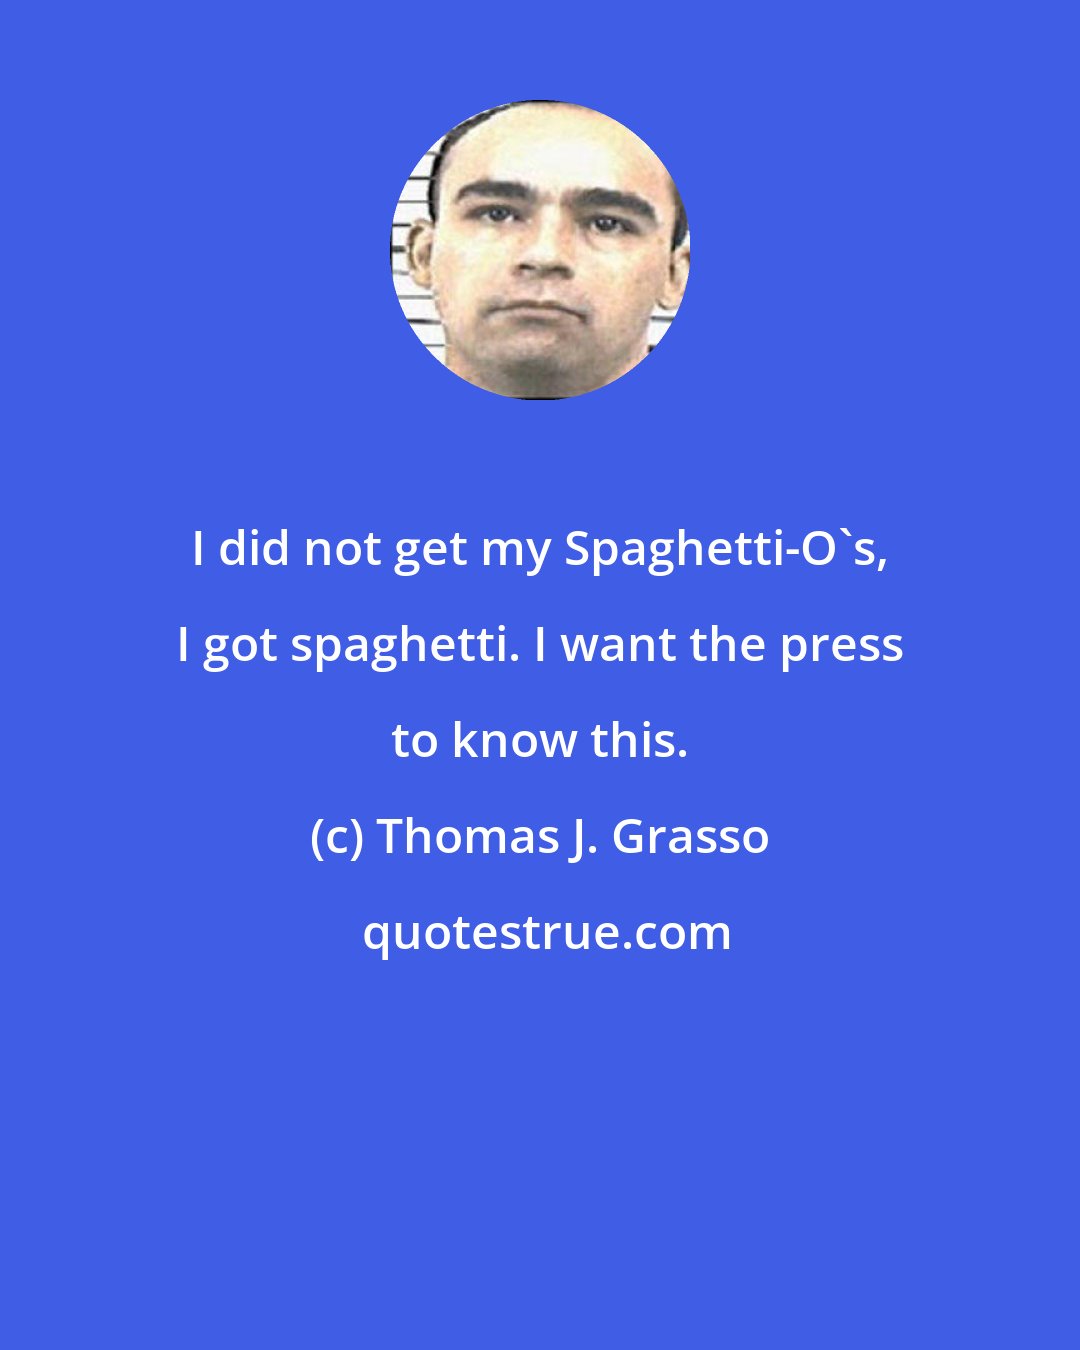 Thomas J. Grasso: I did not get my Spaghetti-O's, I got spaghetti. I want the press to know this.